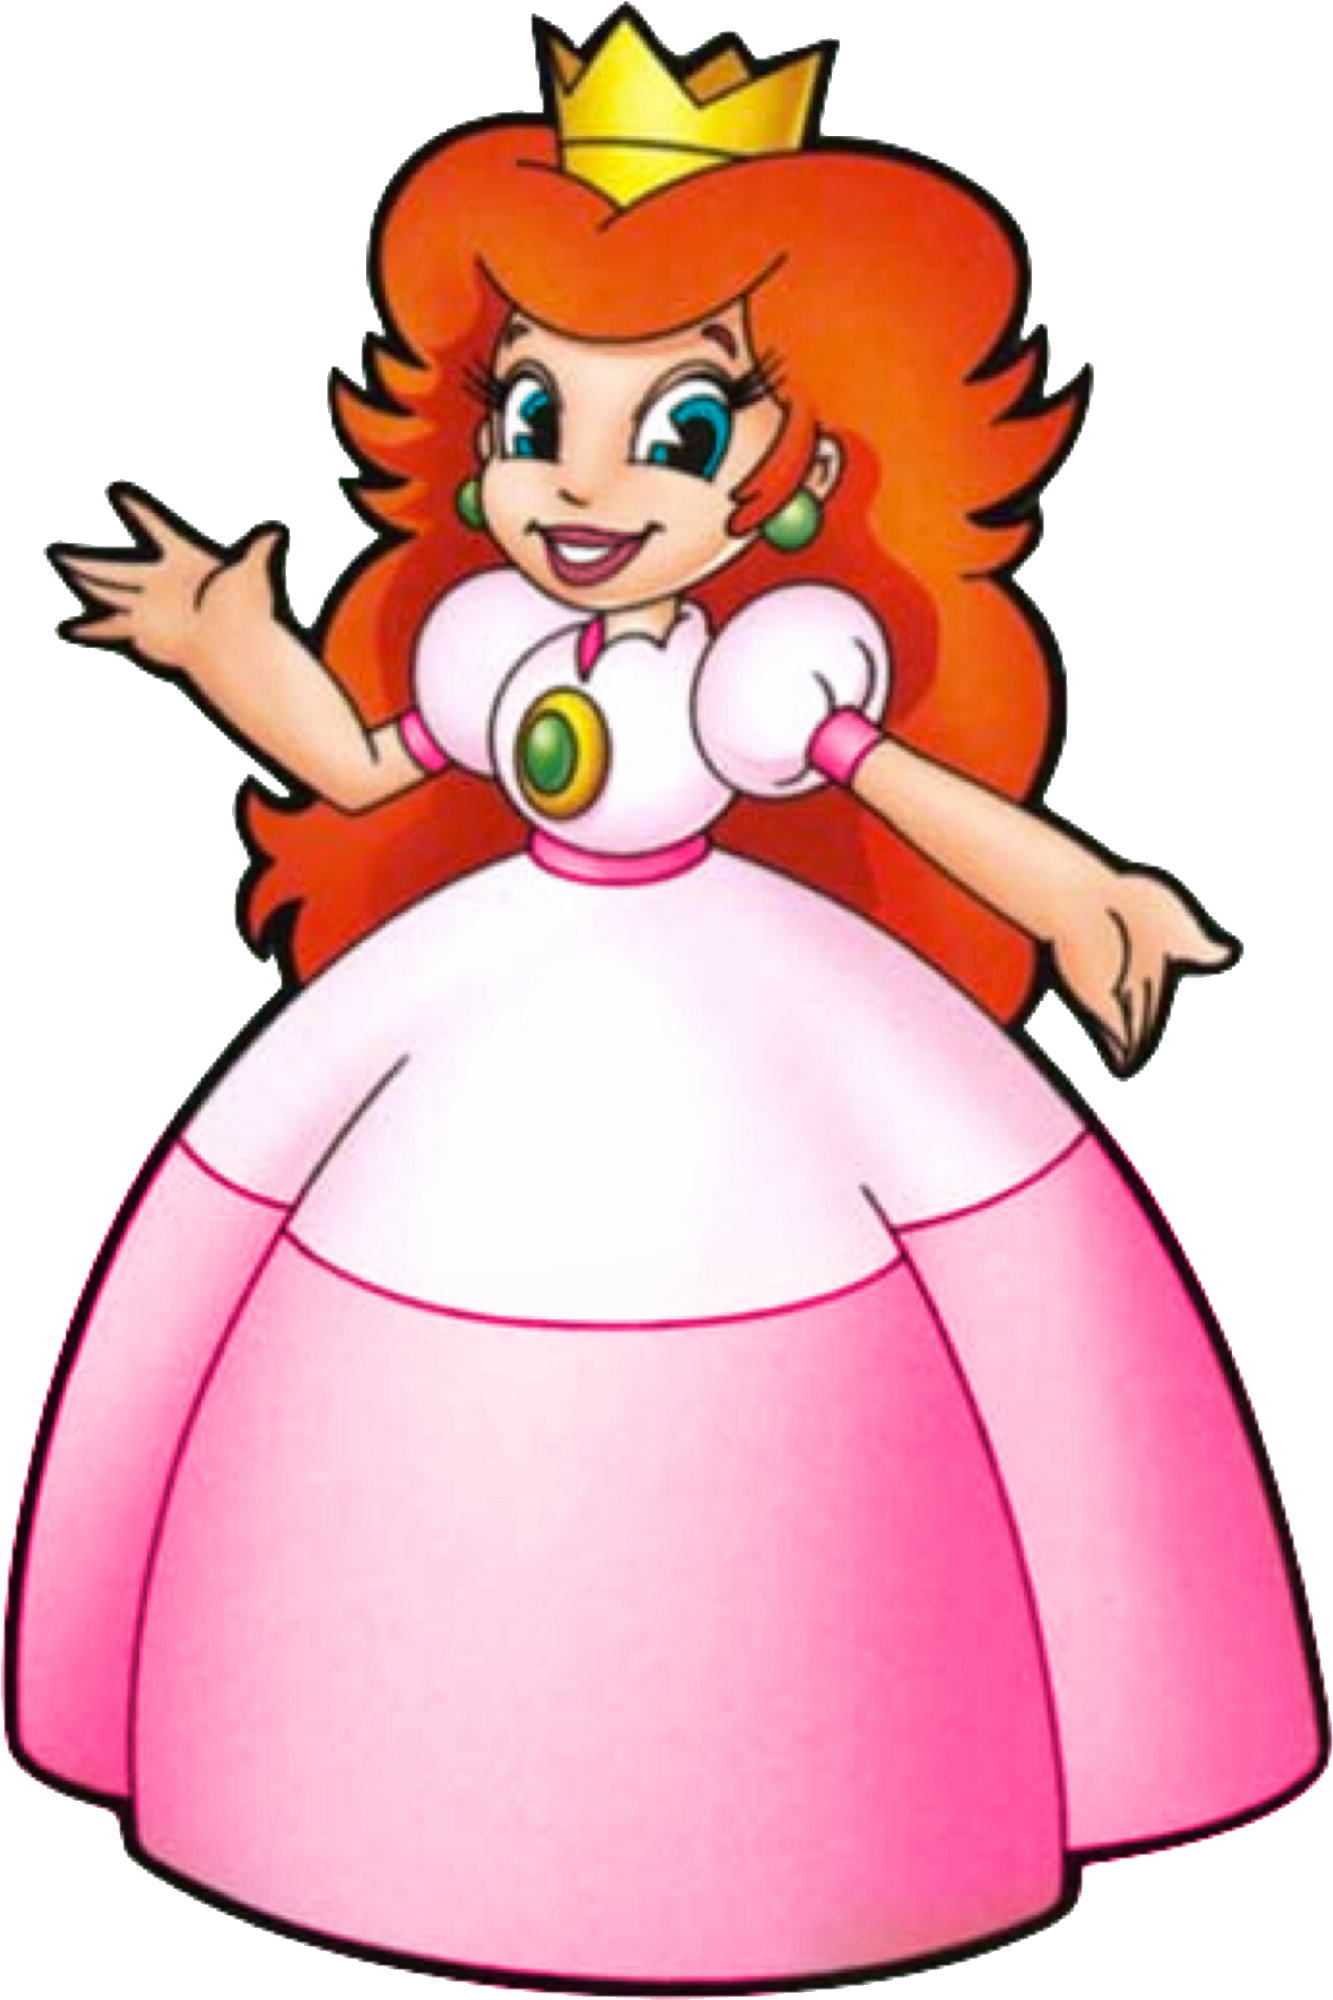 Princess Toadstool - Super Mario Princess Toadstool (1596x2048)